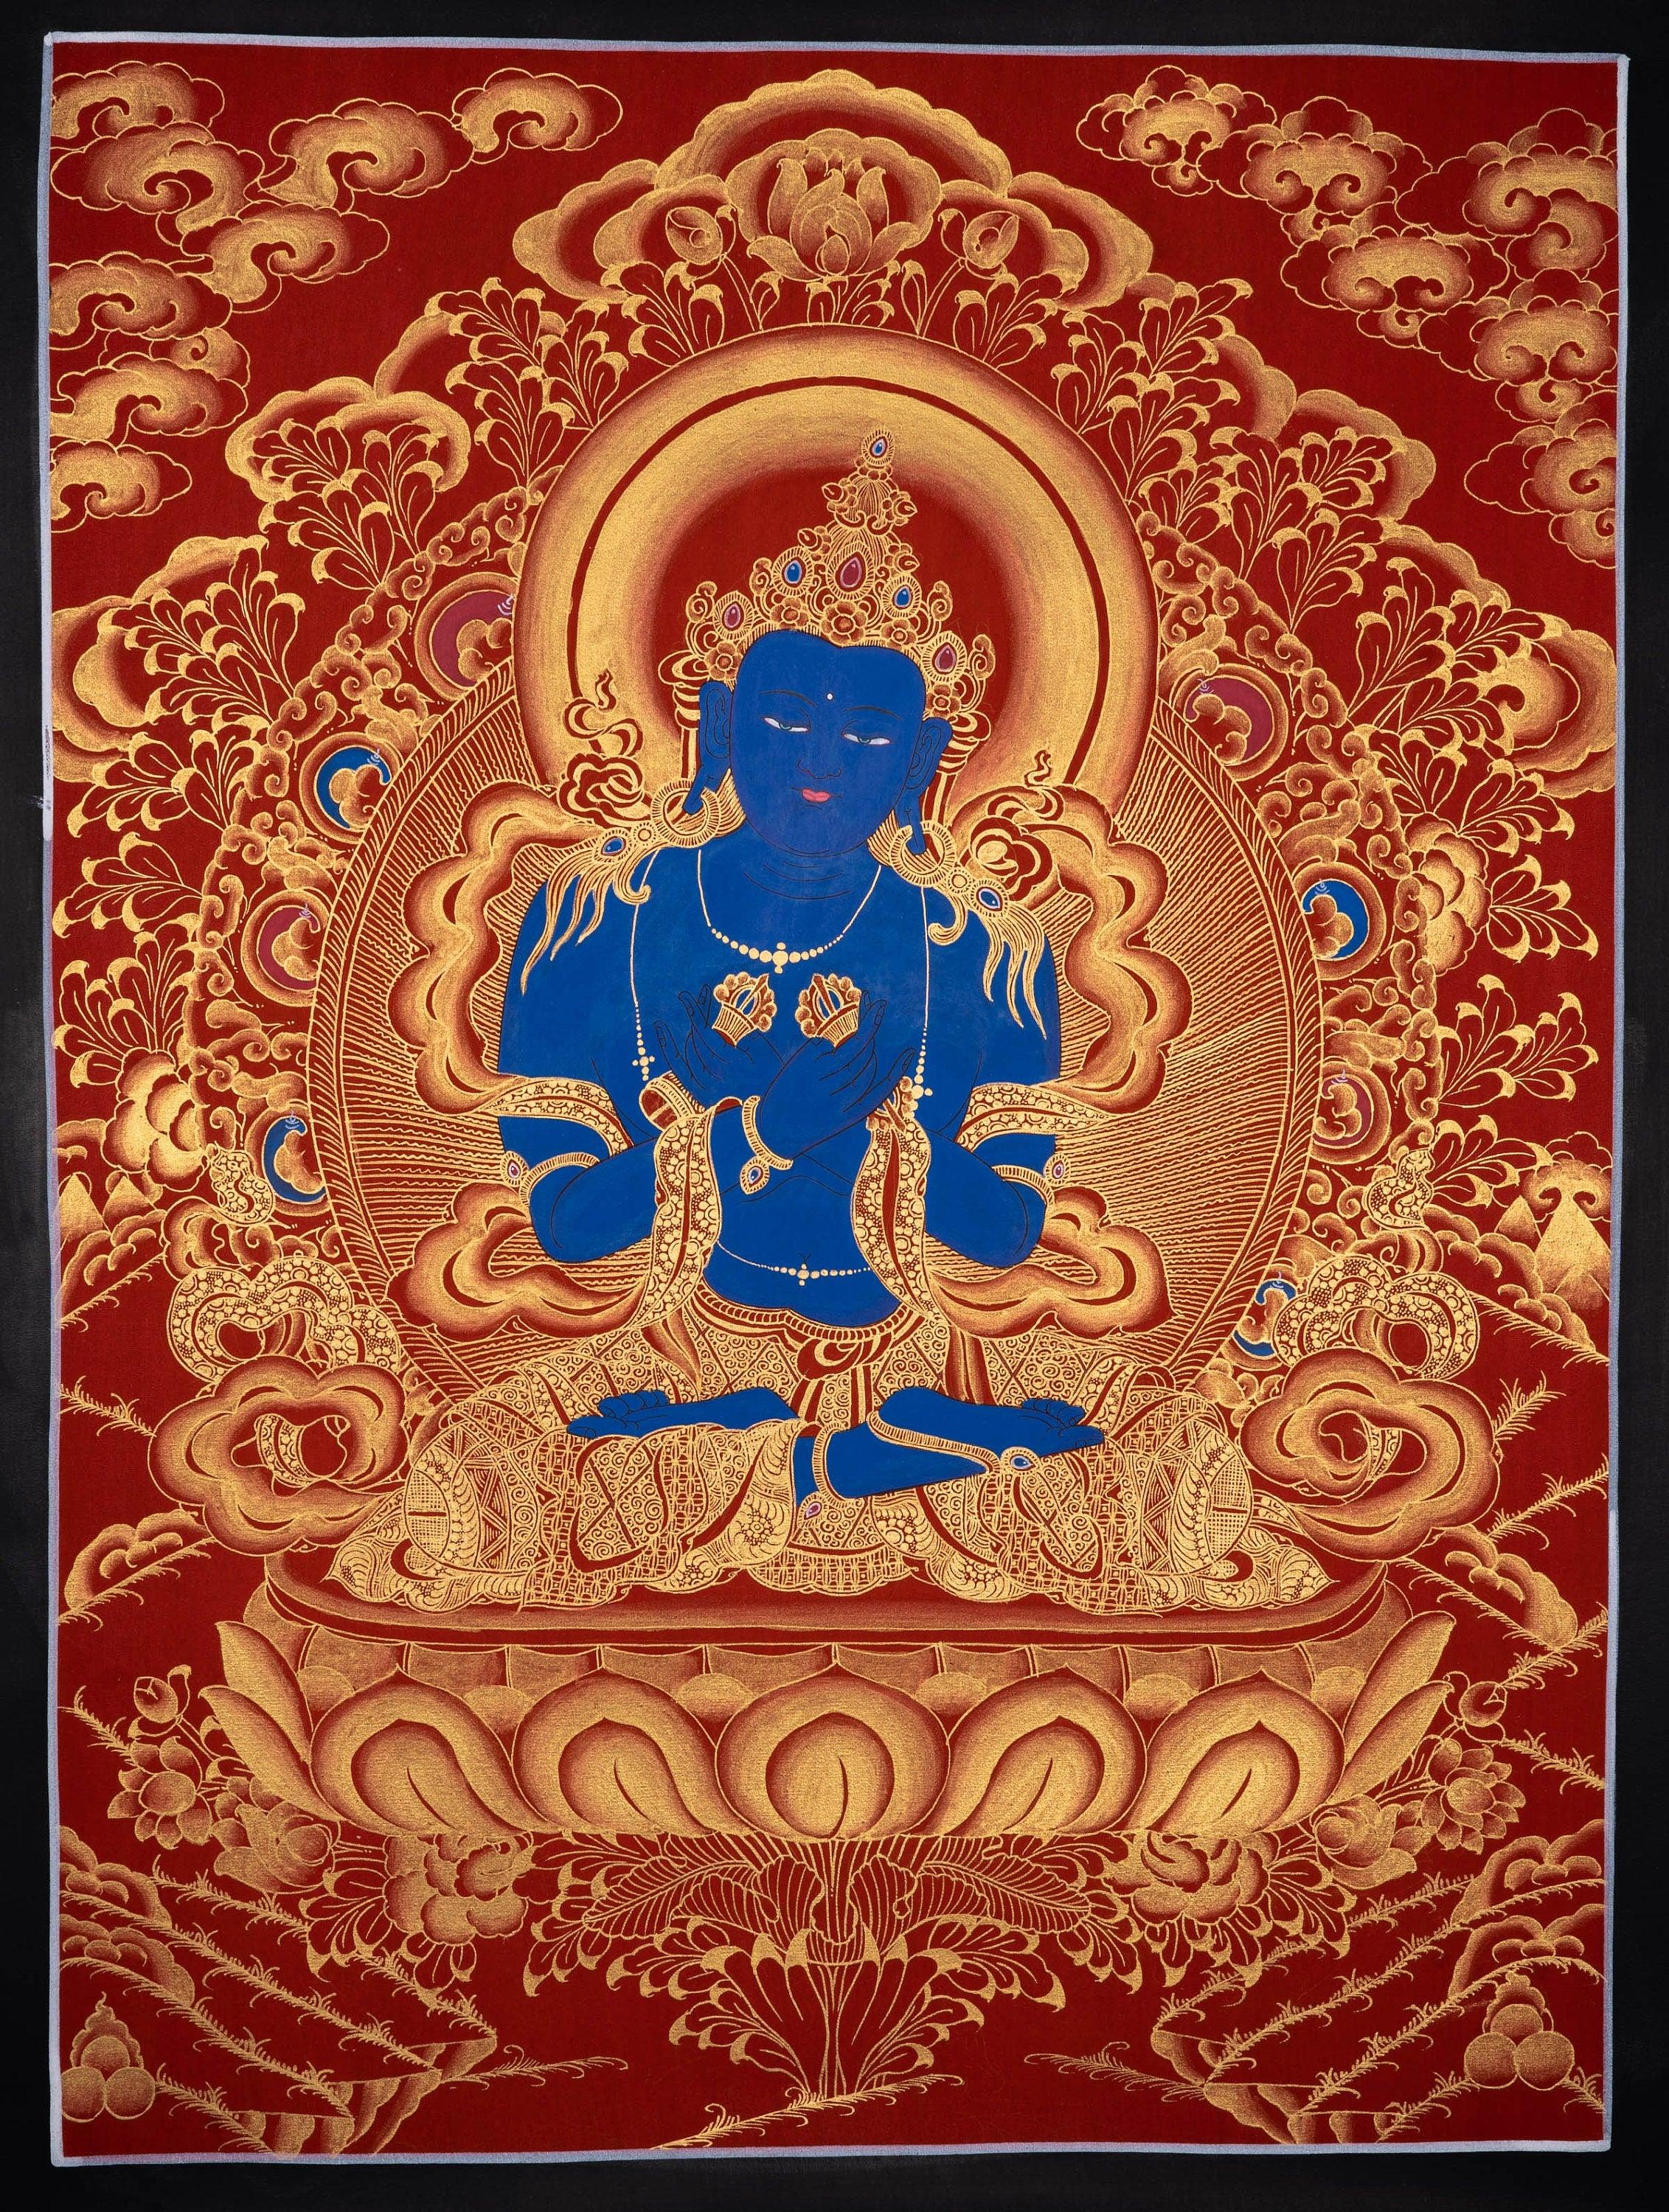 Vajradhara - Thangka Painting For Meditational Practice and Spiritual Gifts